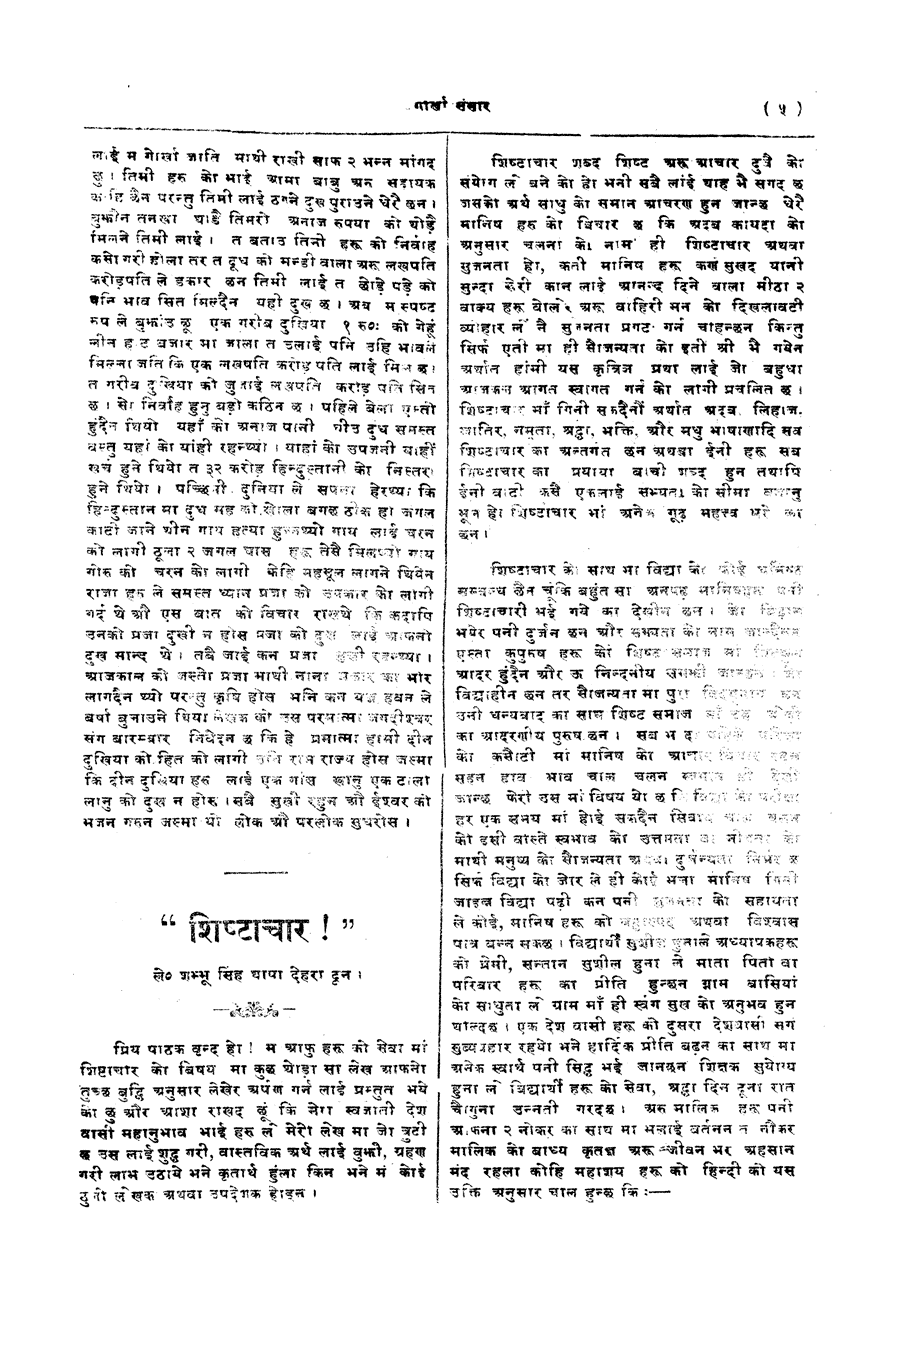 Gorkha Sansar, 8 June 1928, page 5